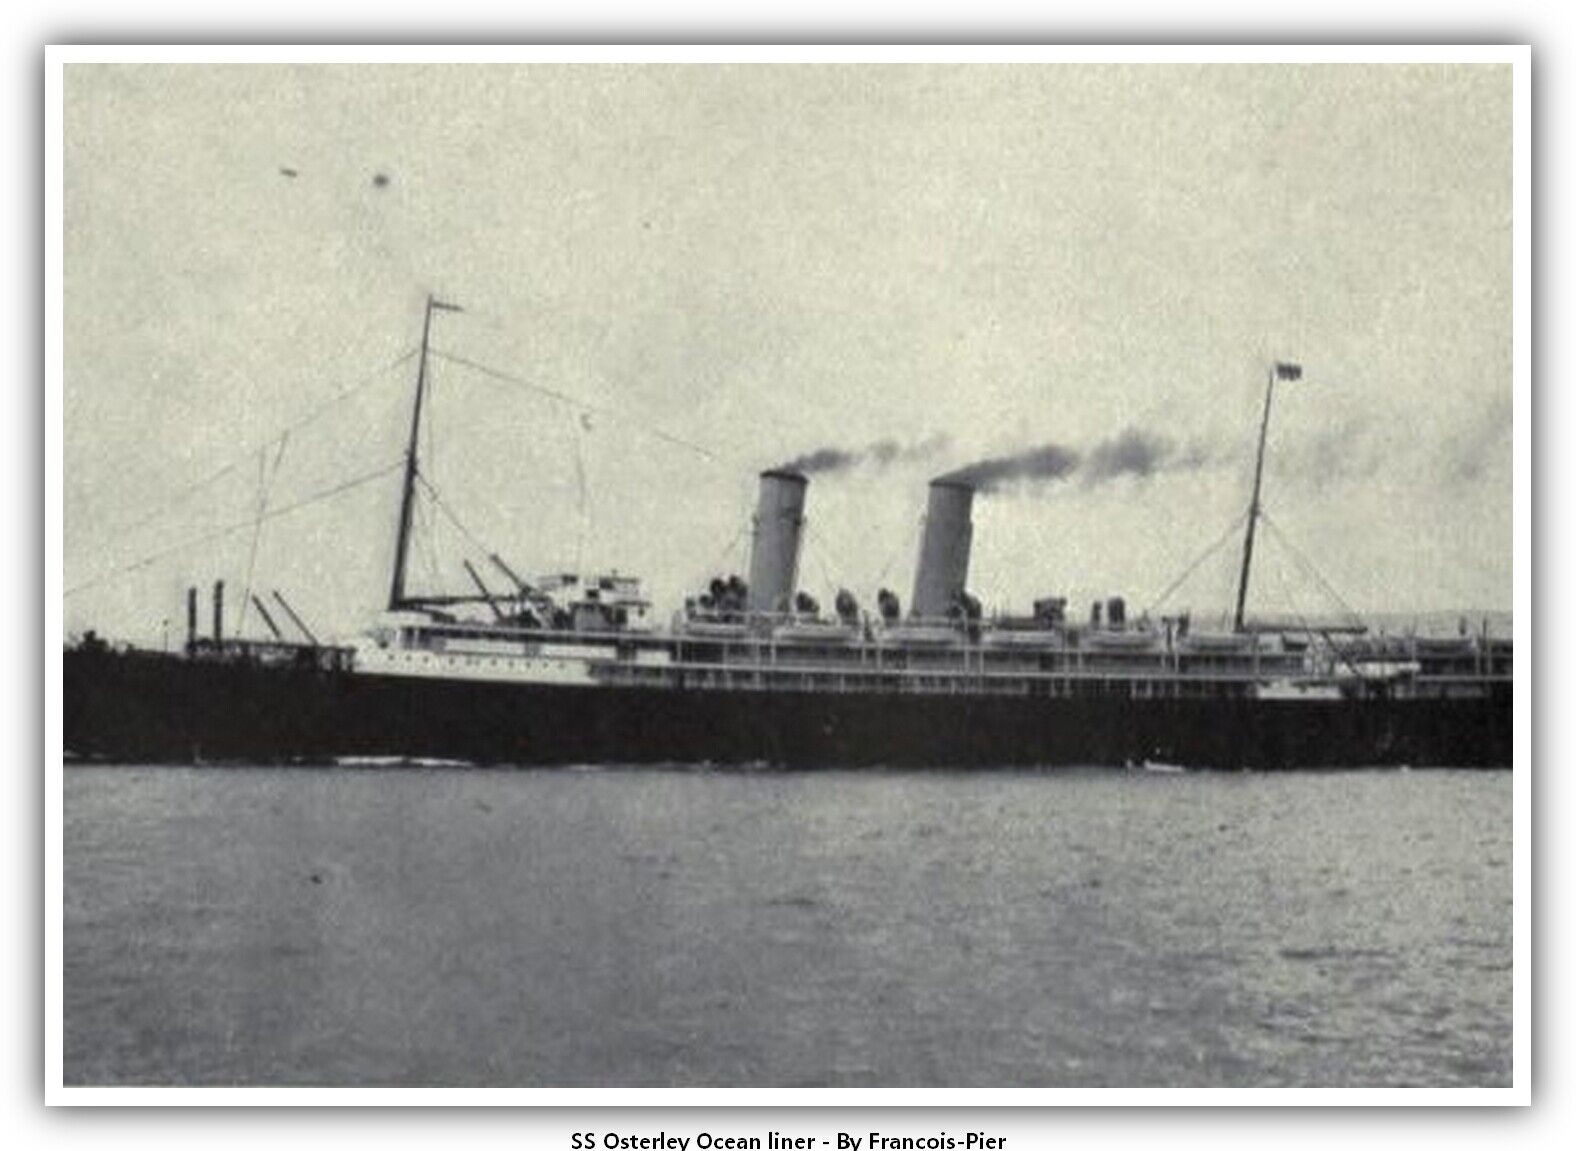 SS Osterley Ocean liner